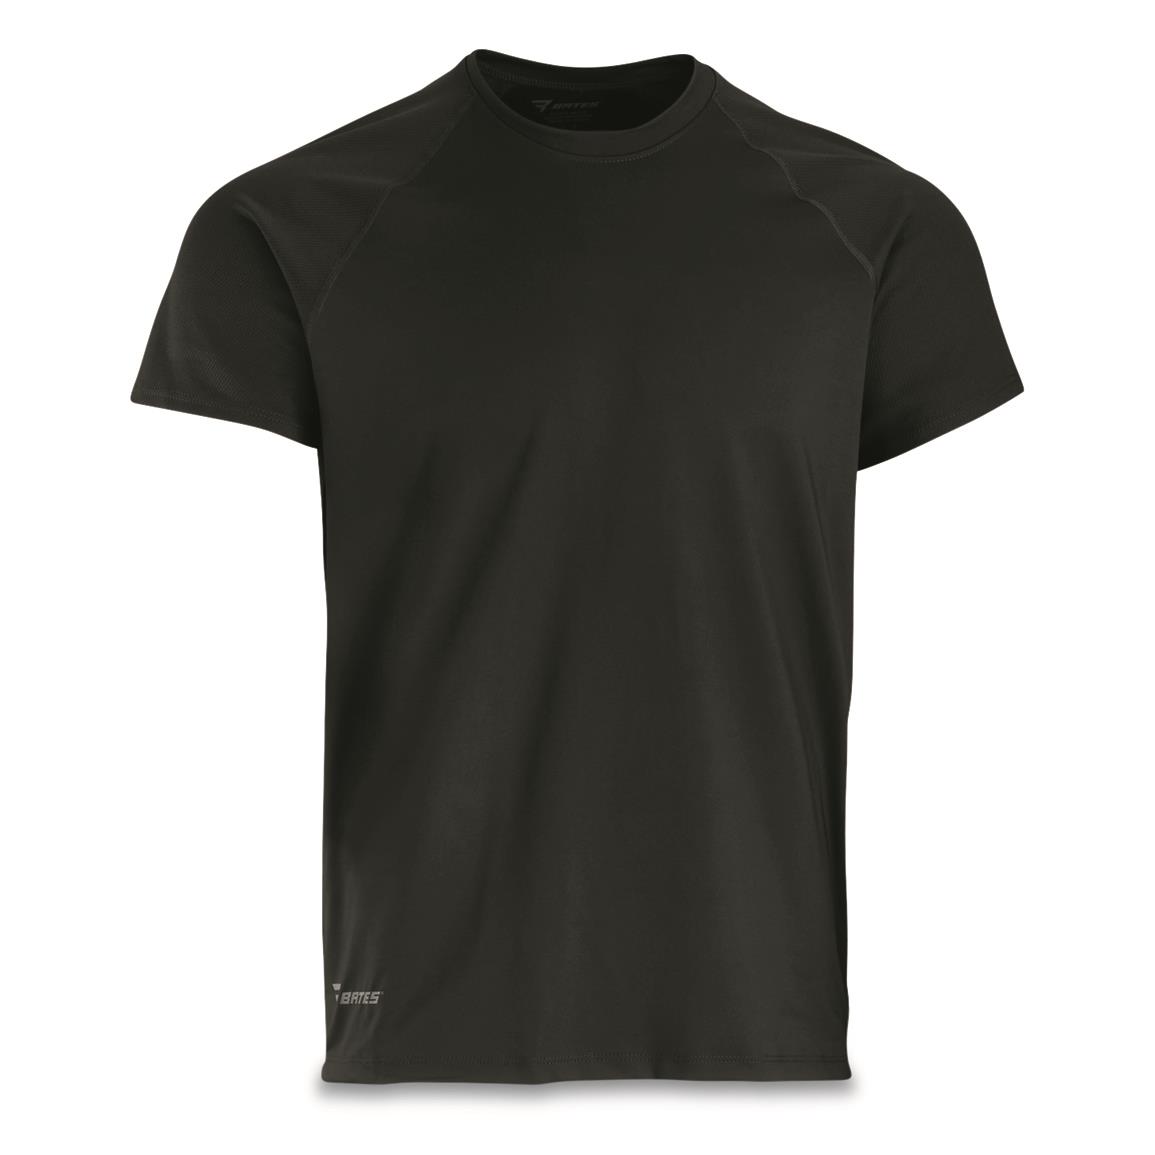 U.S. Military Surplus Bates Short Sleeve Base Layer Shirts, 2 pack, New, Black